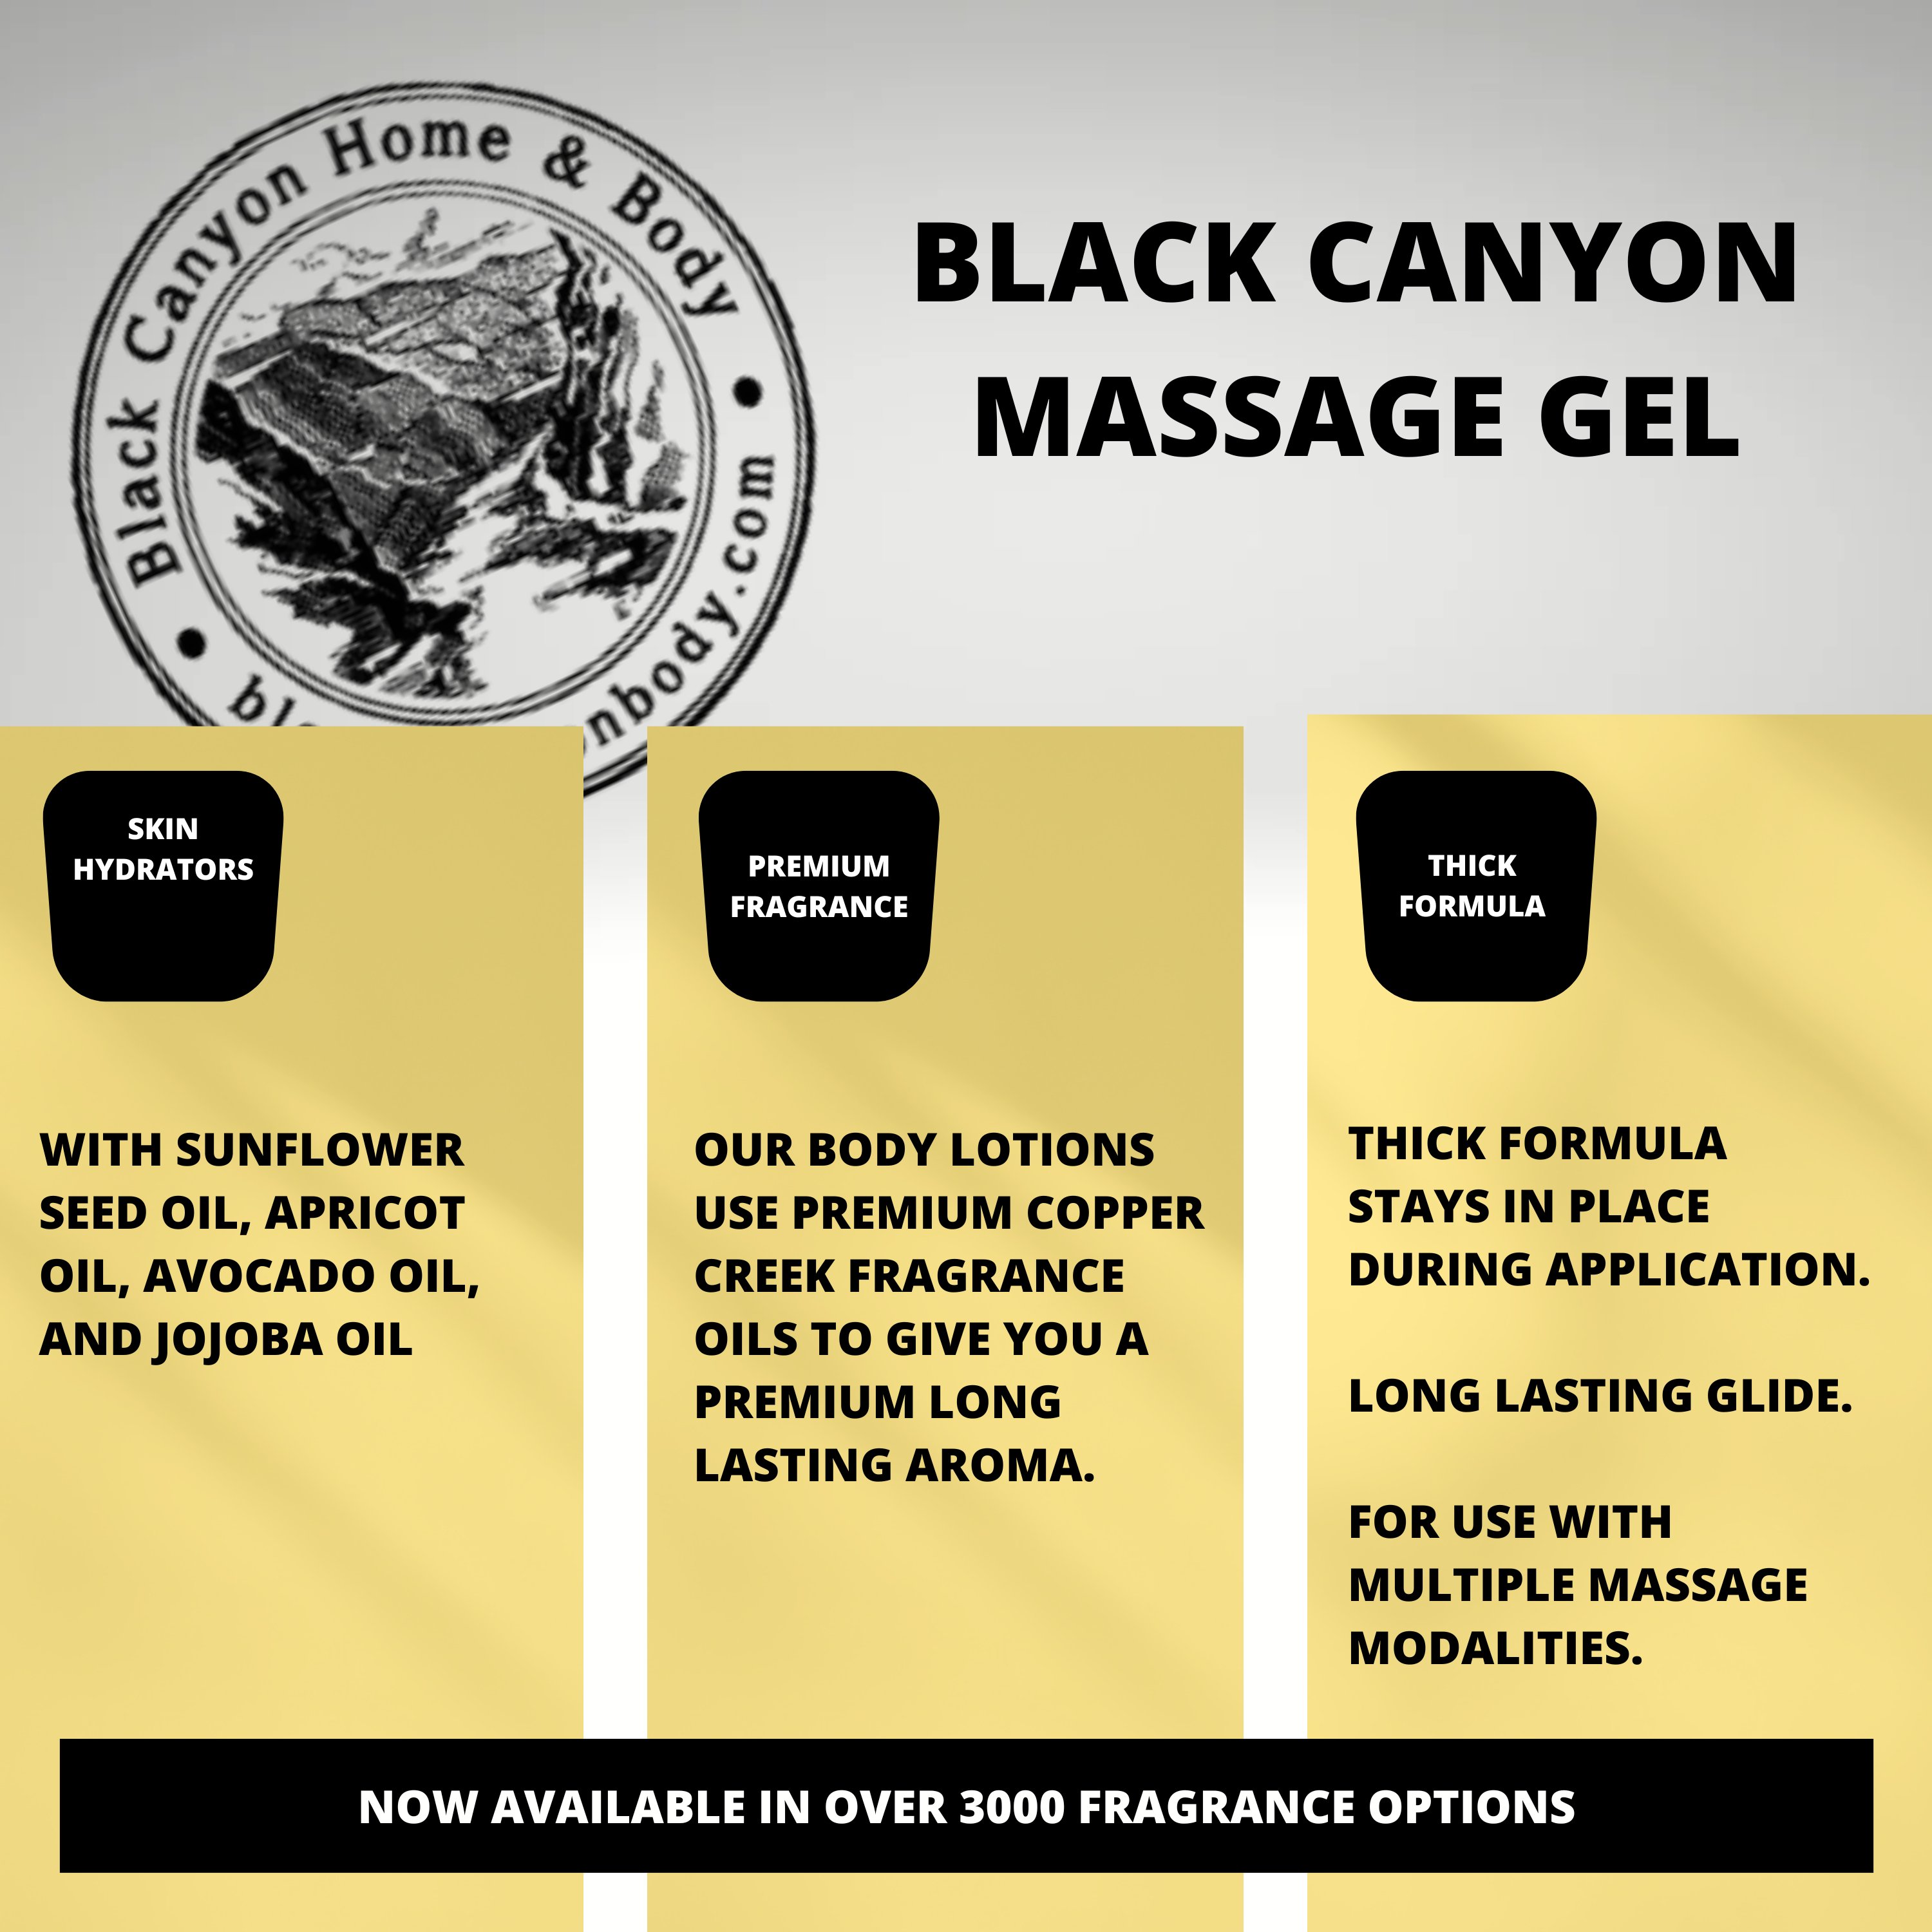 Black Canyon Bug Juice Scented Massage Gel